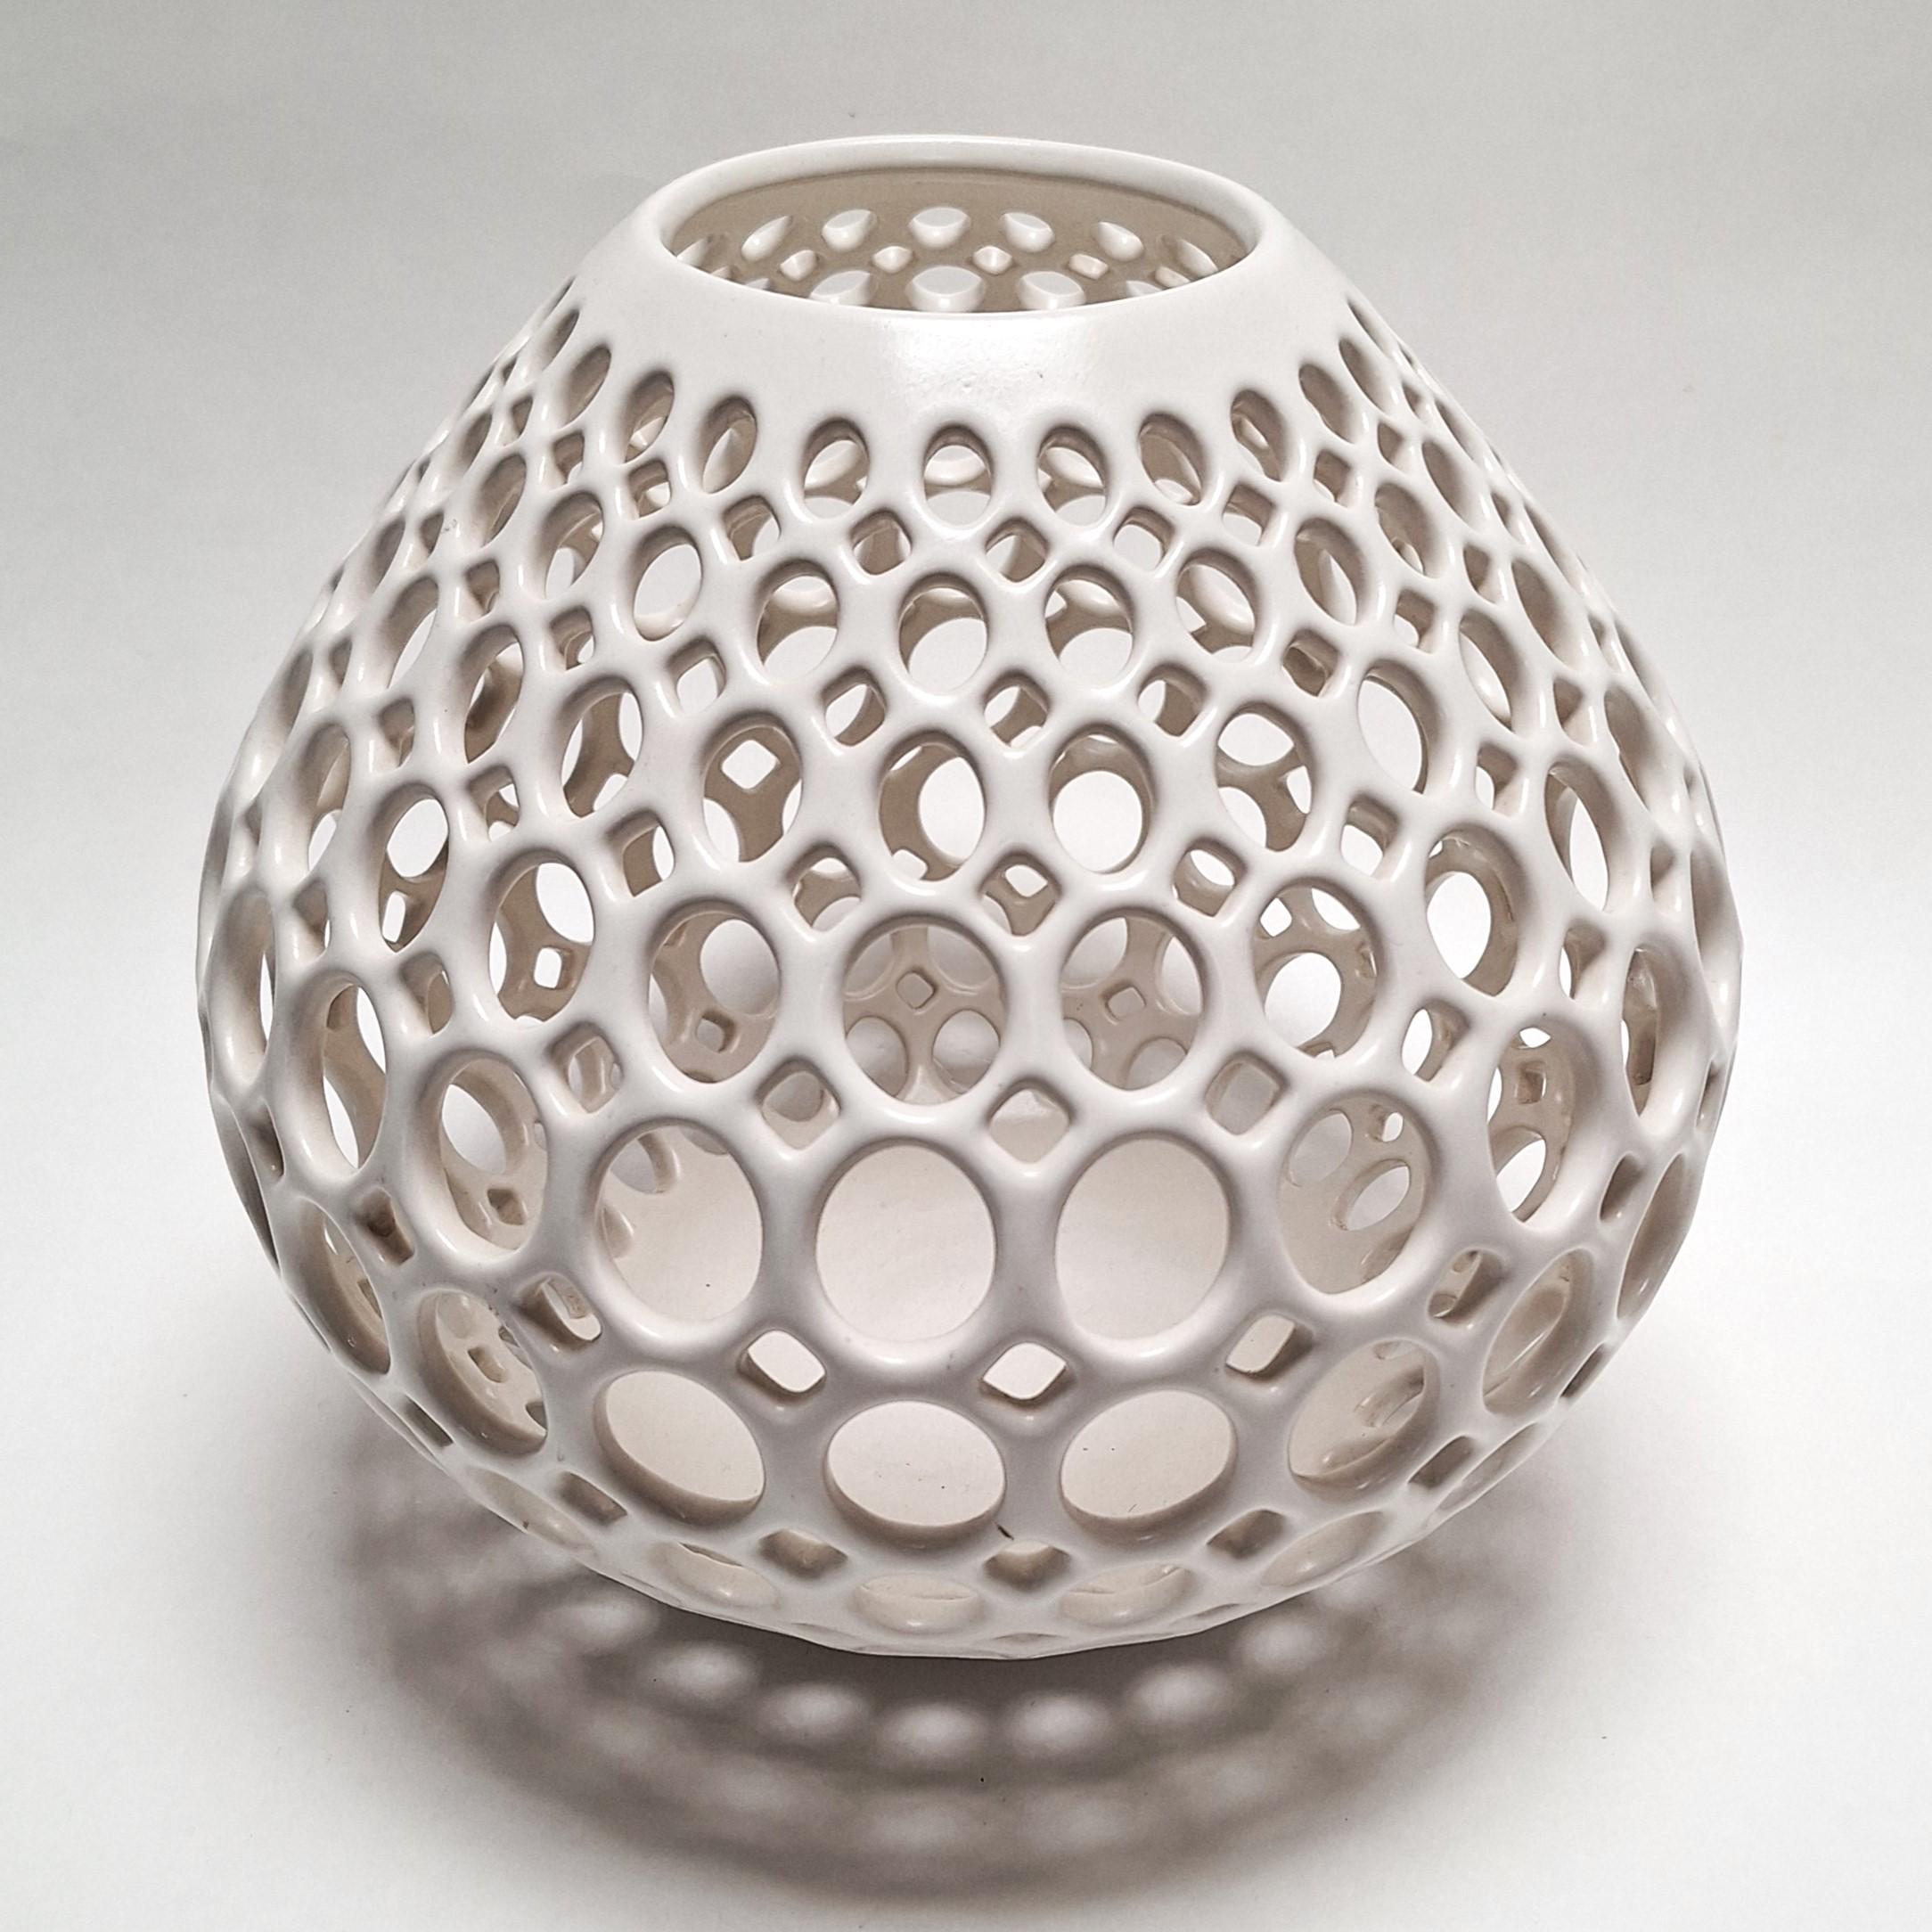 Teardrop Oval Lace White - Objet fors Objects Moderns Objects en céramique contemporaine